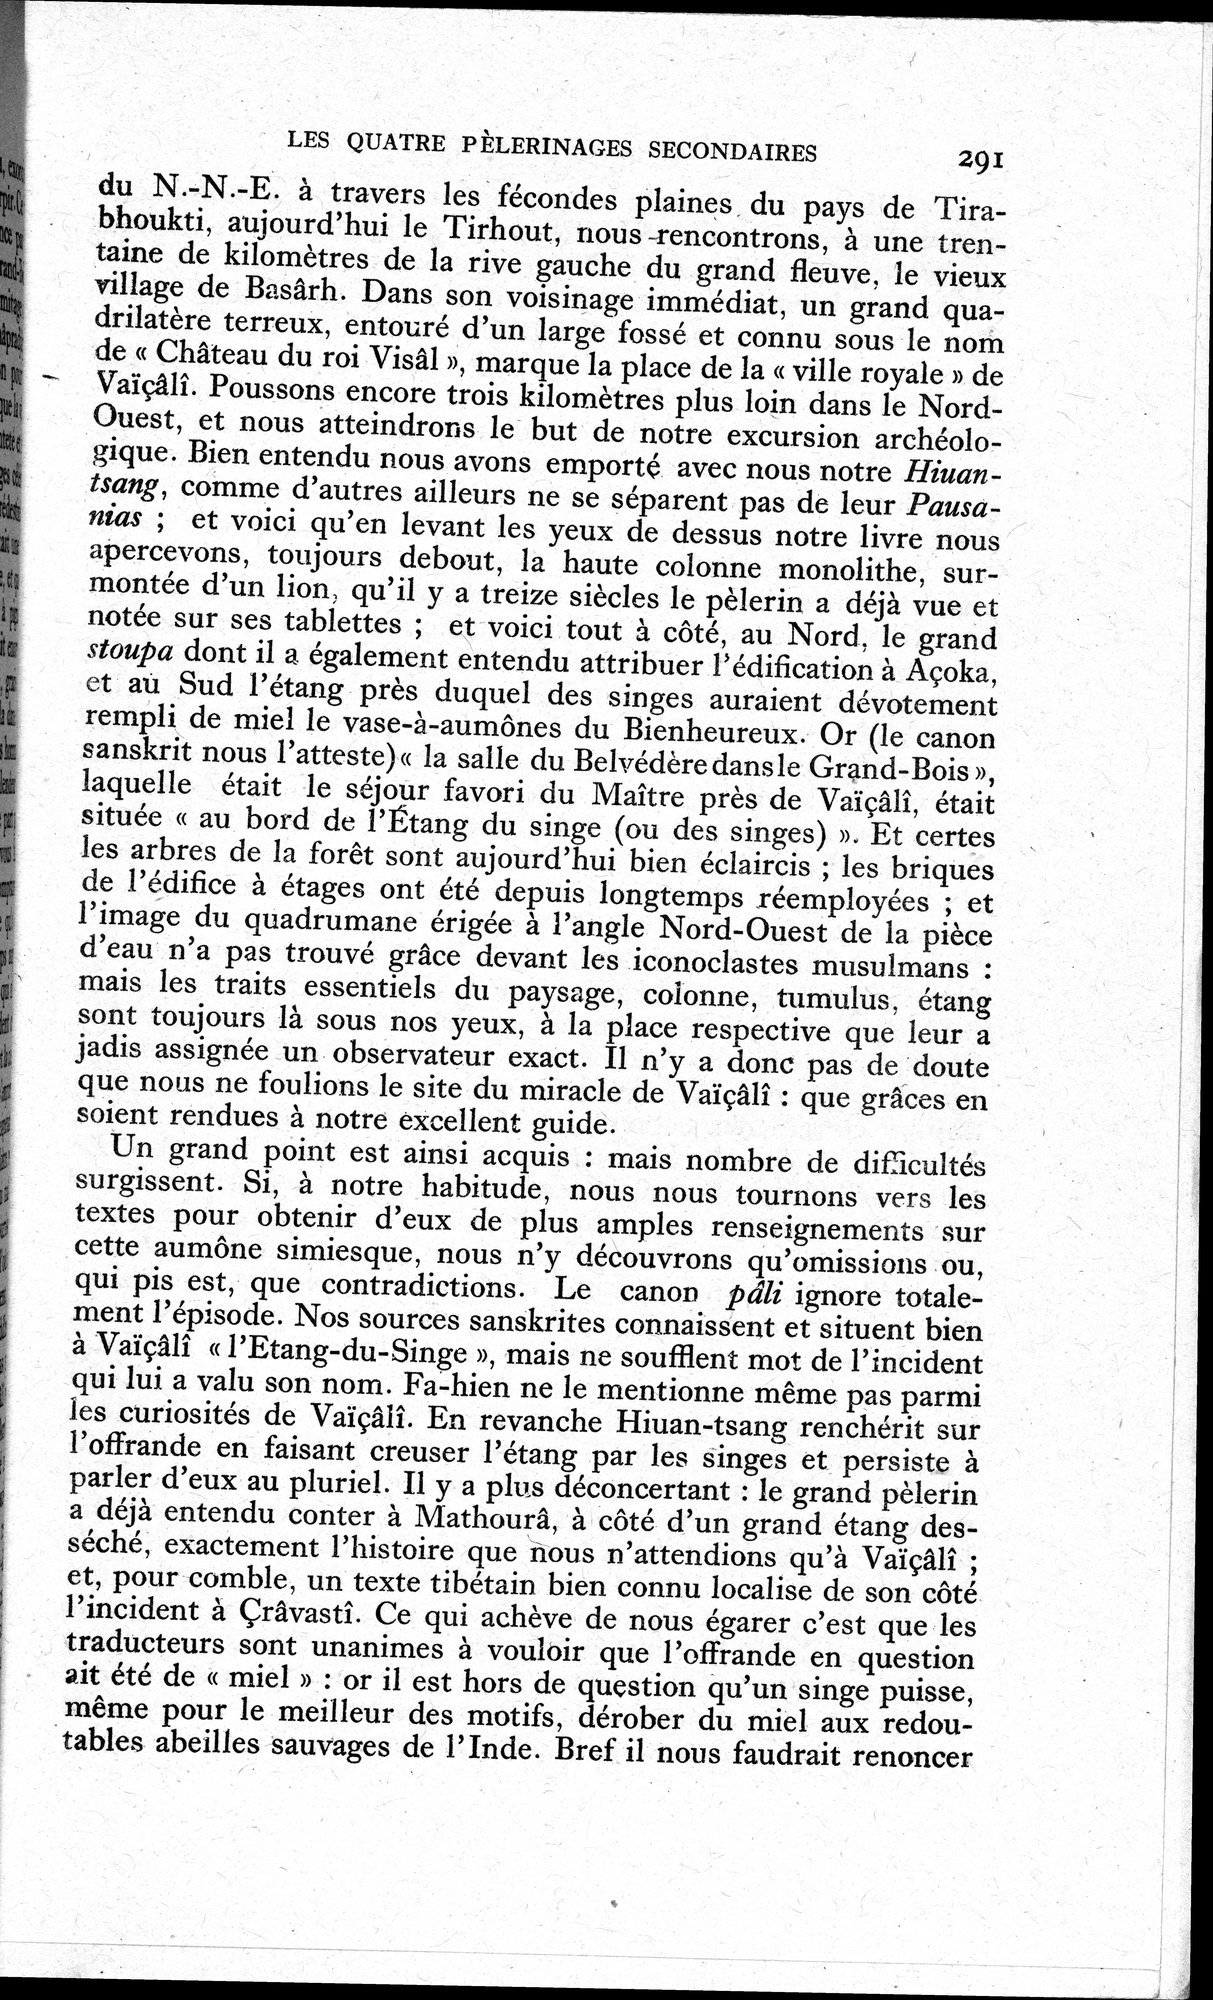 La Vie du Bouddha : vol.1 / Page 293 (Grayscale High Resolution Image)